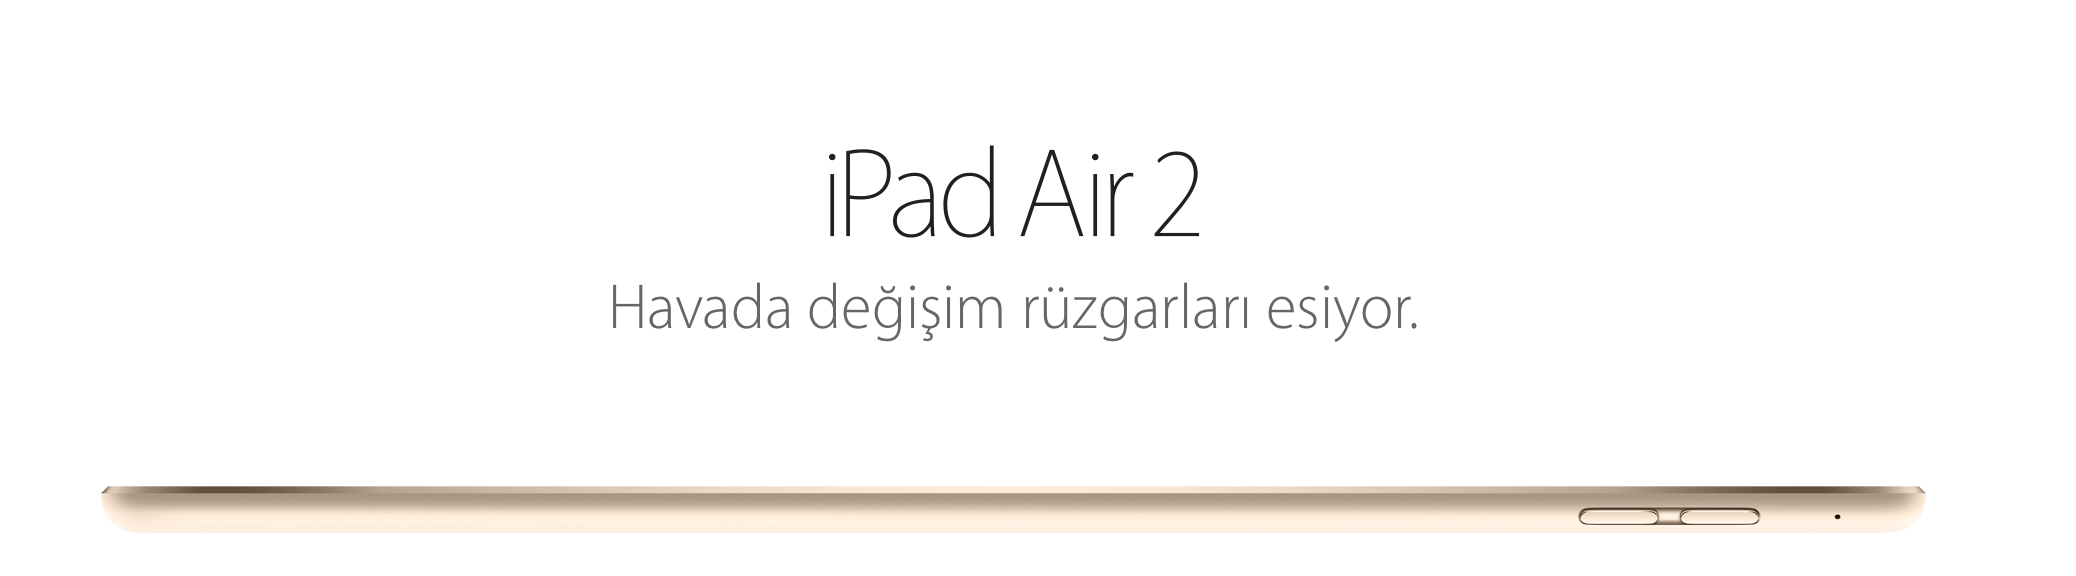 iPad Air 2 ve iPad mini 3 Tanıtıldı